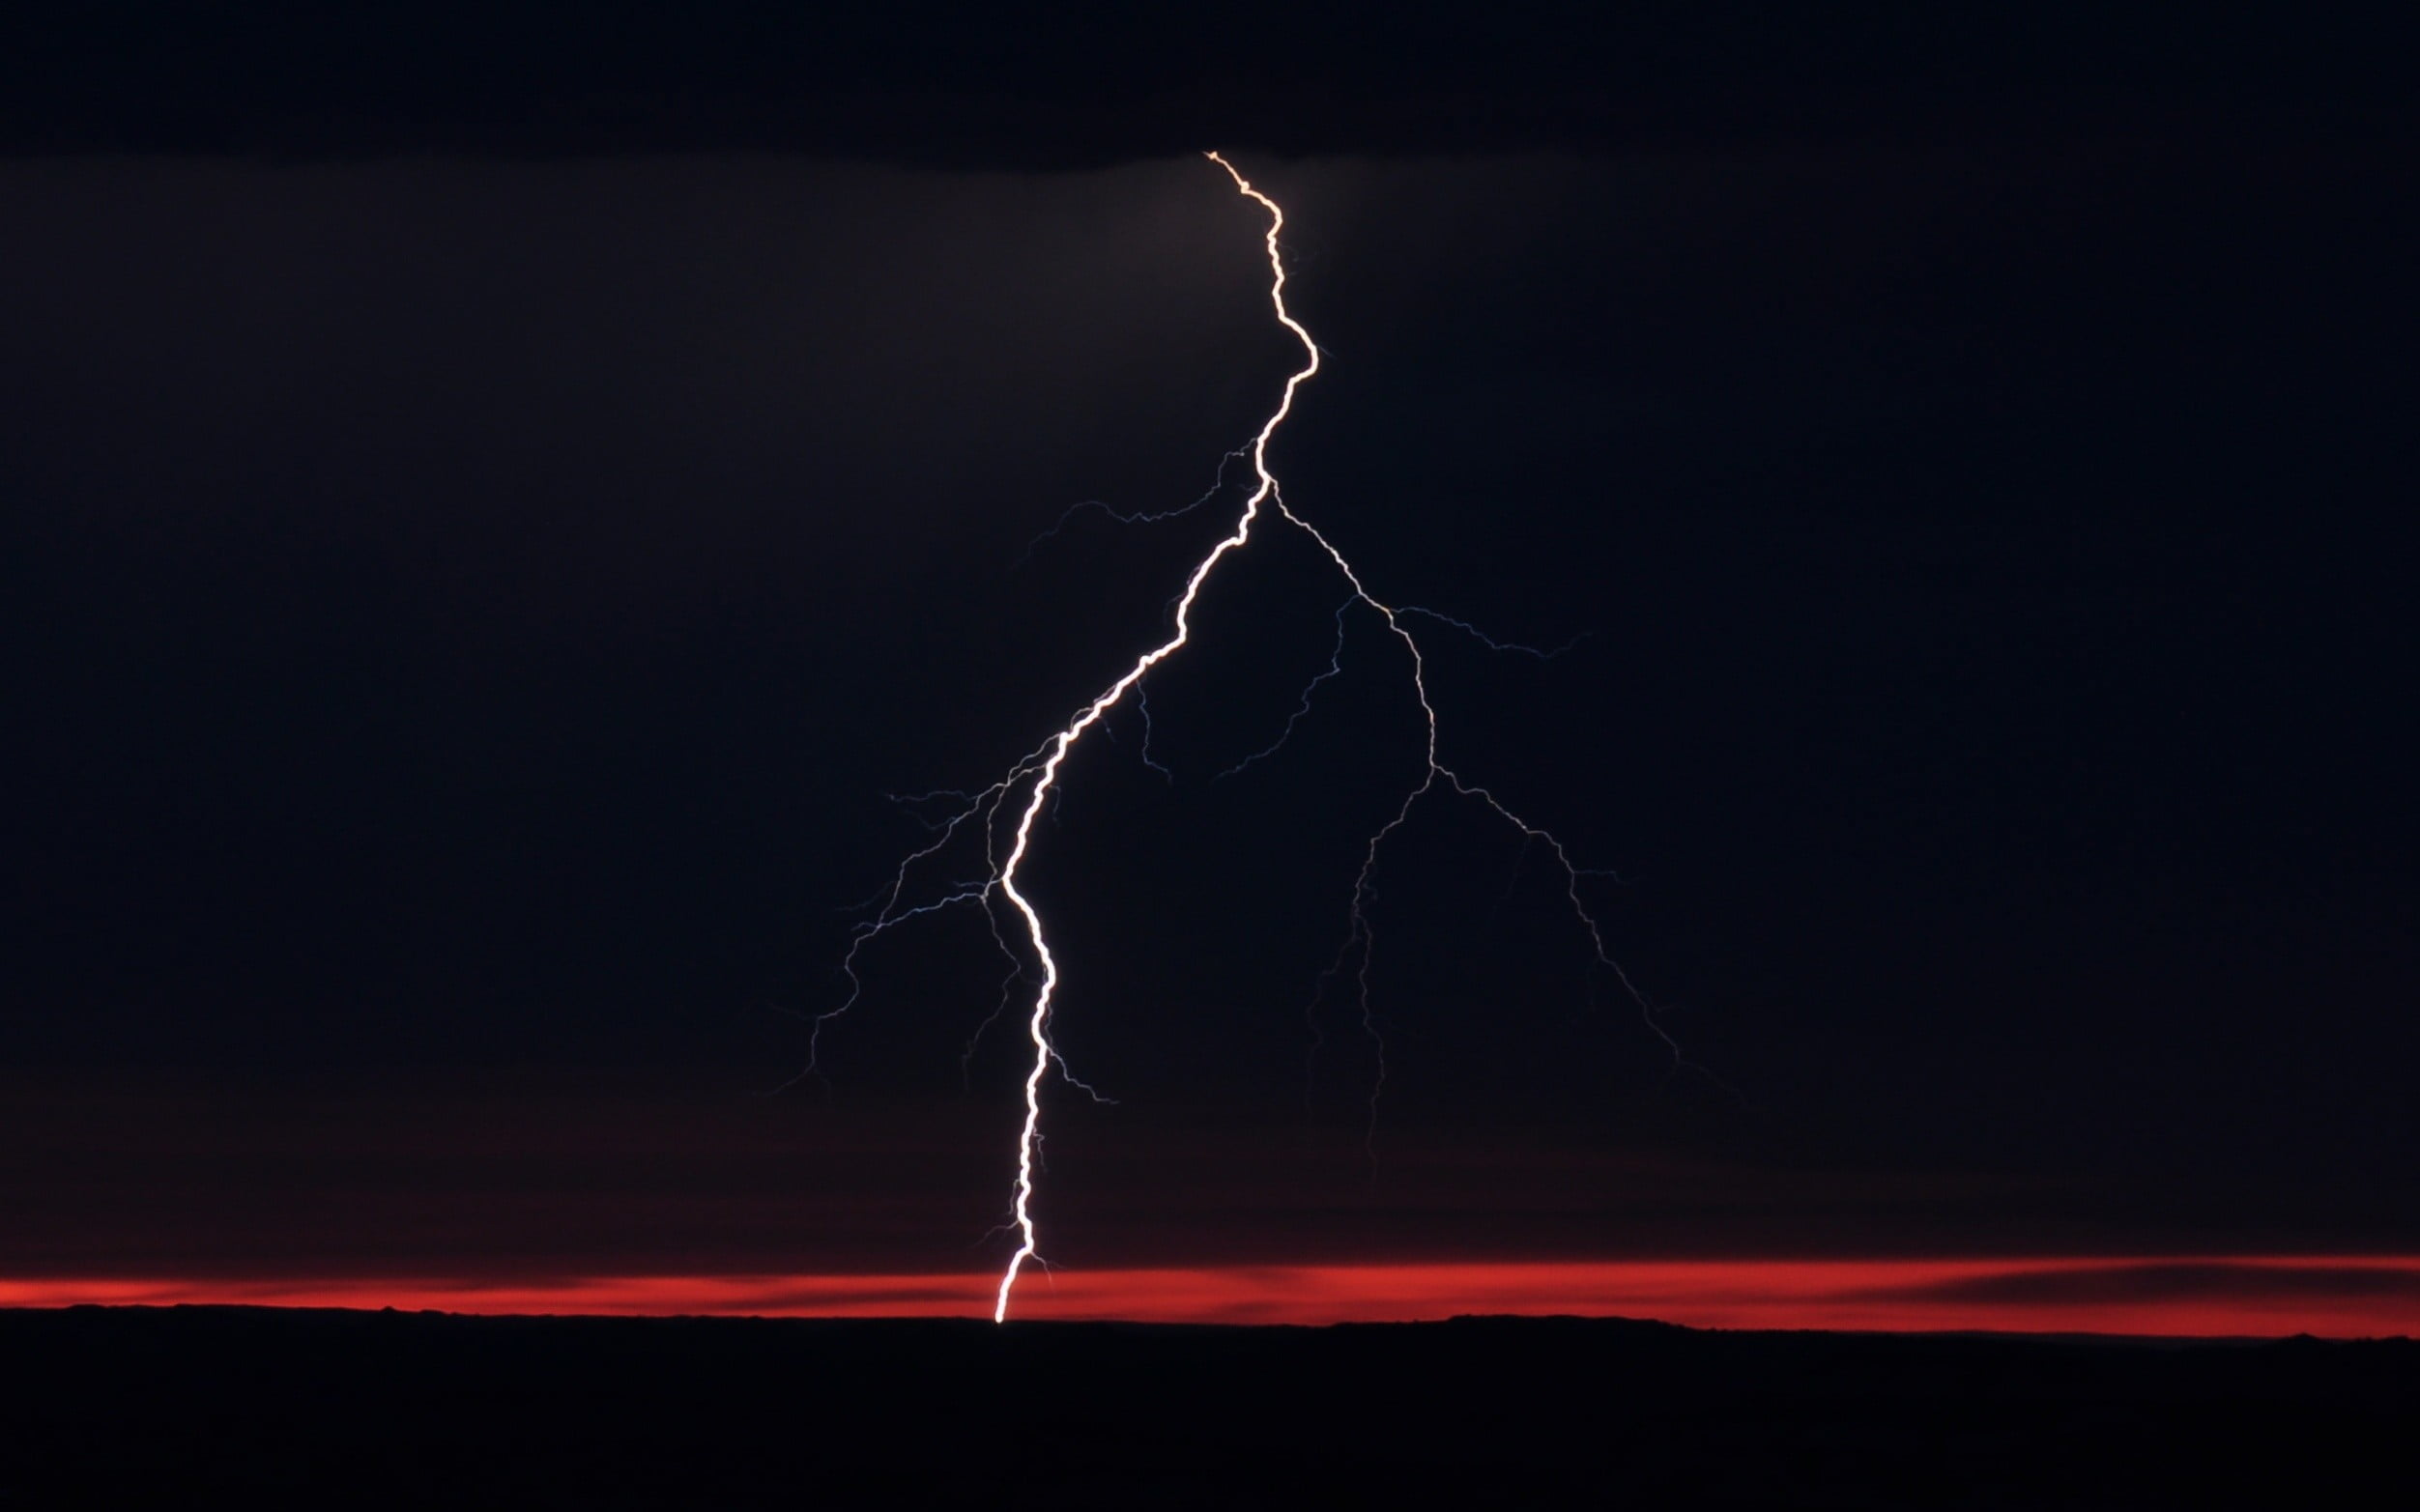 thunder during golden hour photo, photography, landscape, nature, lightning